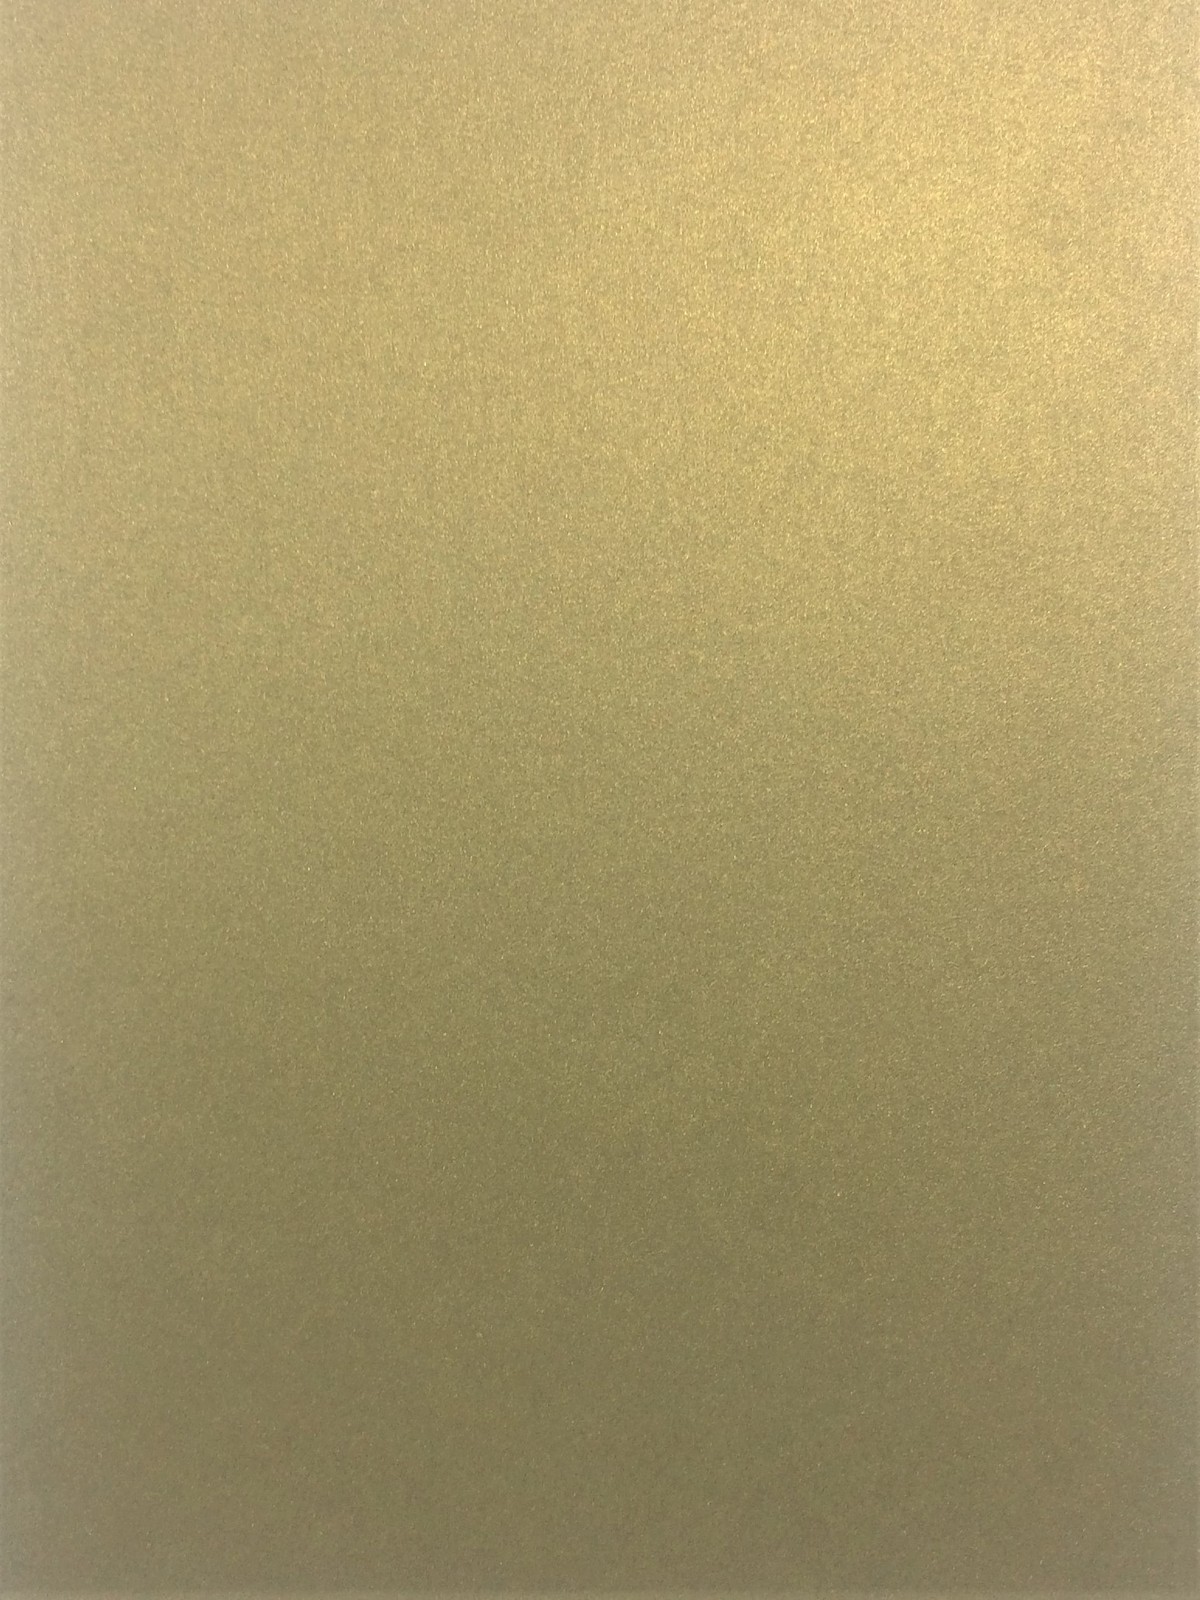 Curious Metallic Gold Leaf Paper A4 120gsm Amazing Paper